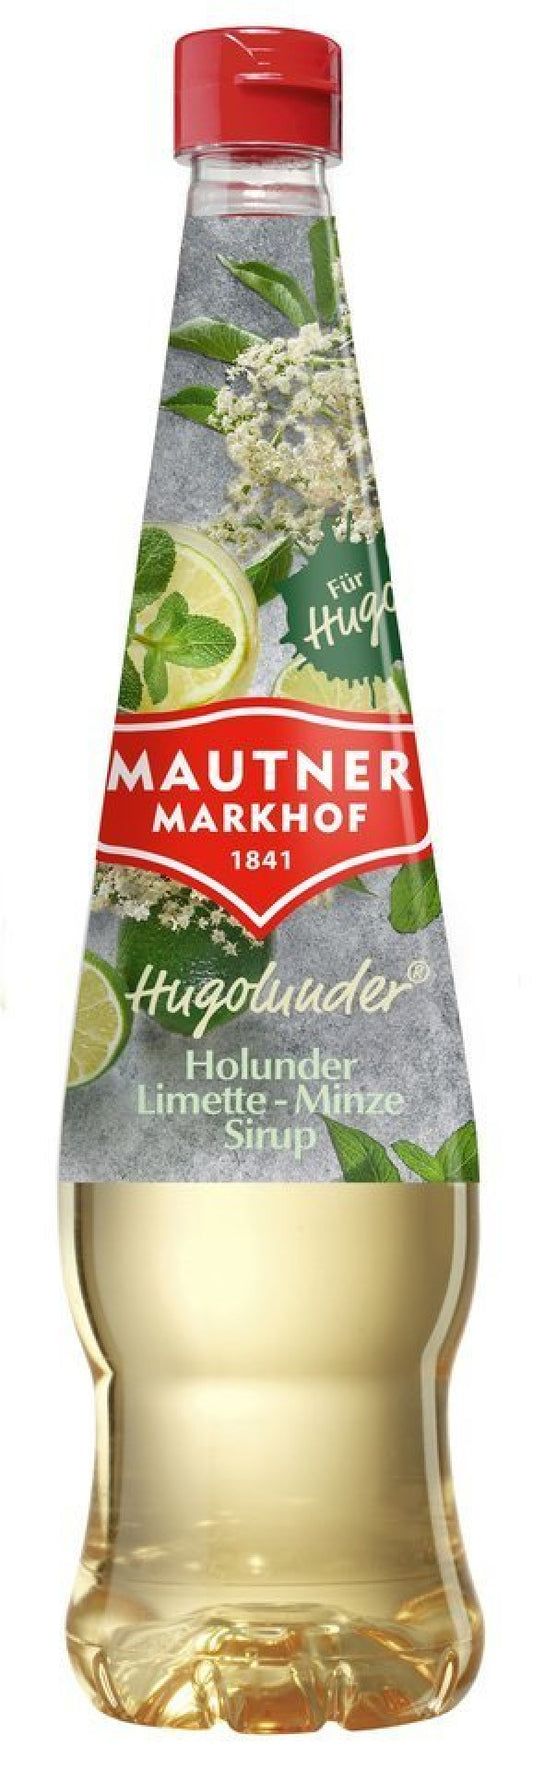 Mautner Markhof Sirup Hugolunder® Holunder Limette Minze